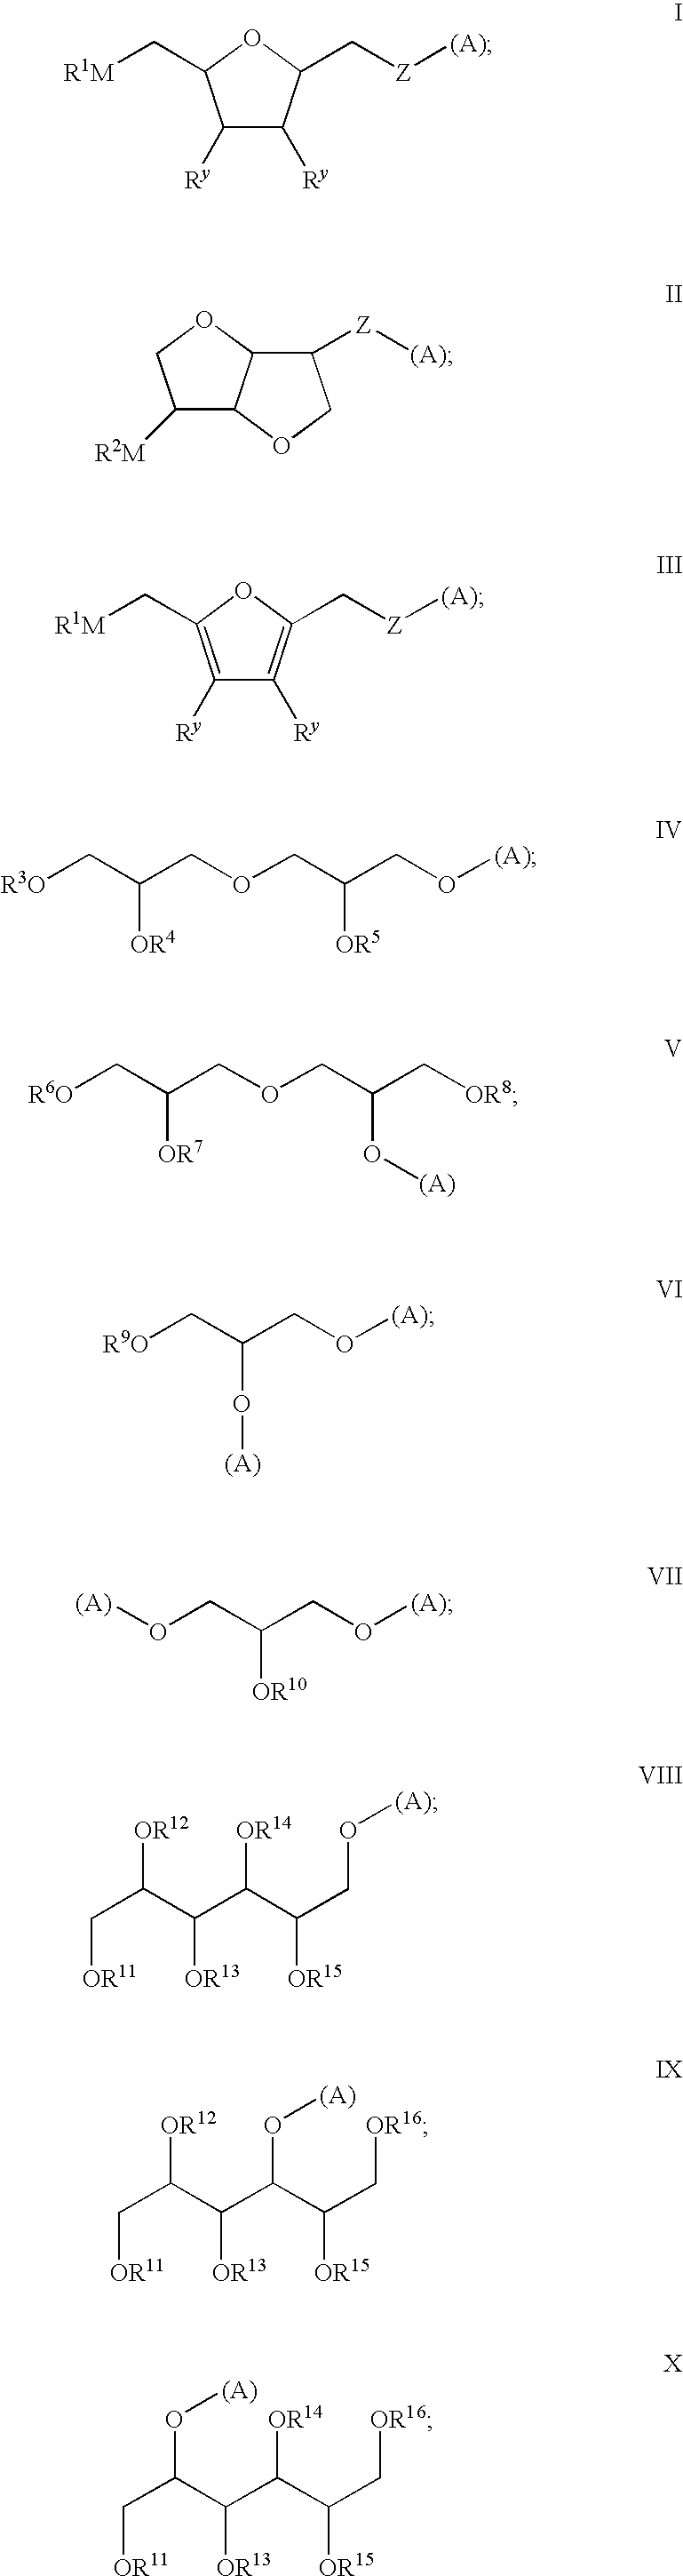 Levulinic acid ester derivatives as reactive plasticizers and coalescent solvents